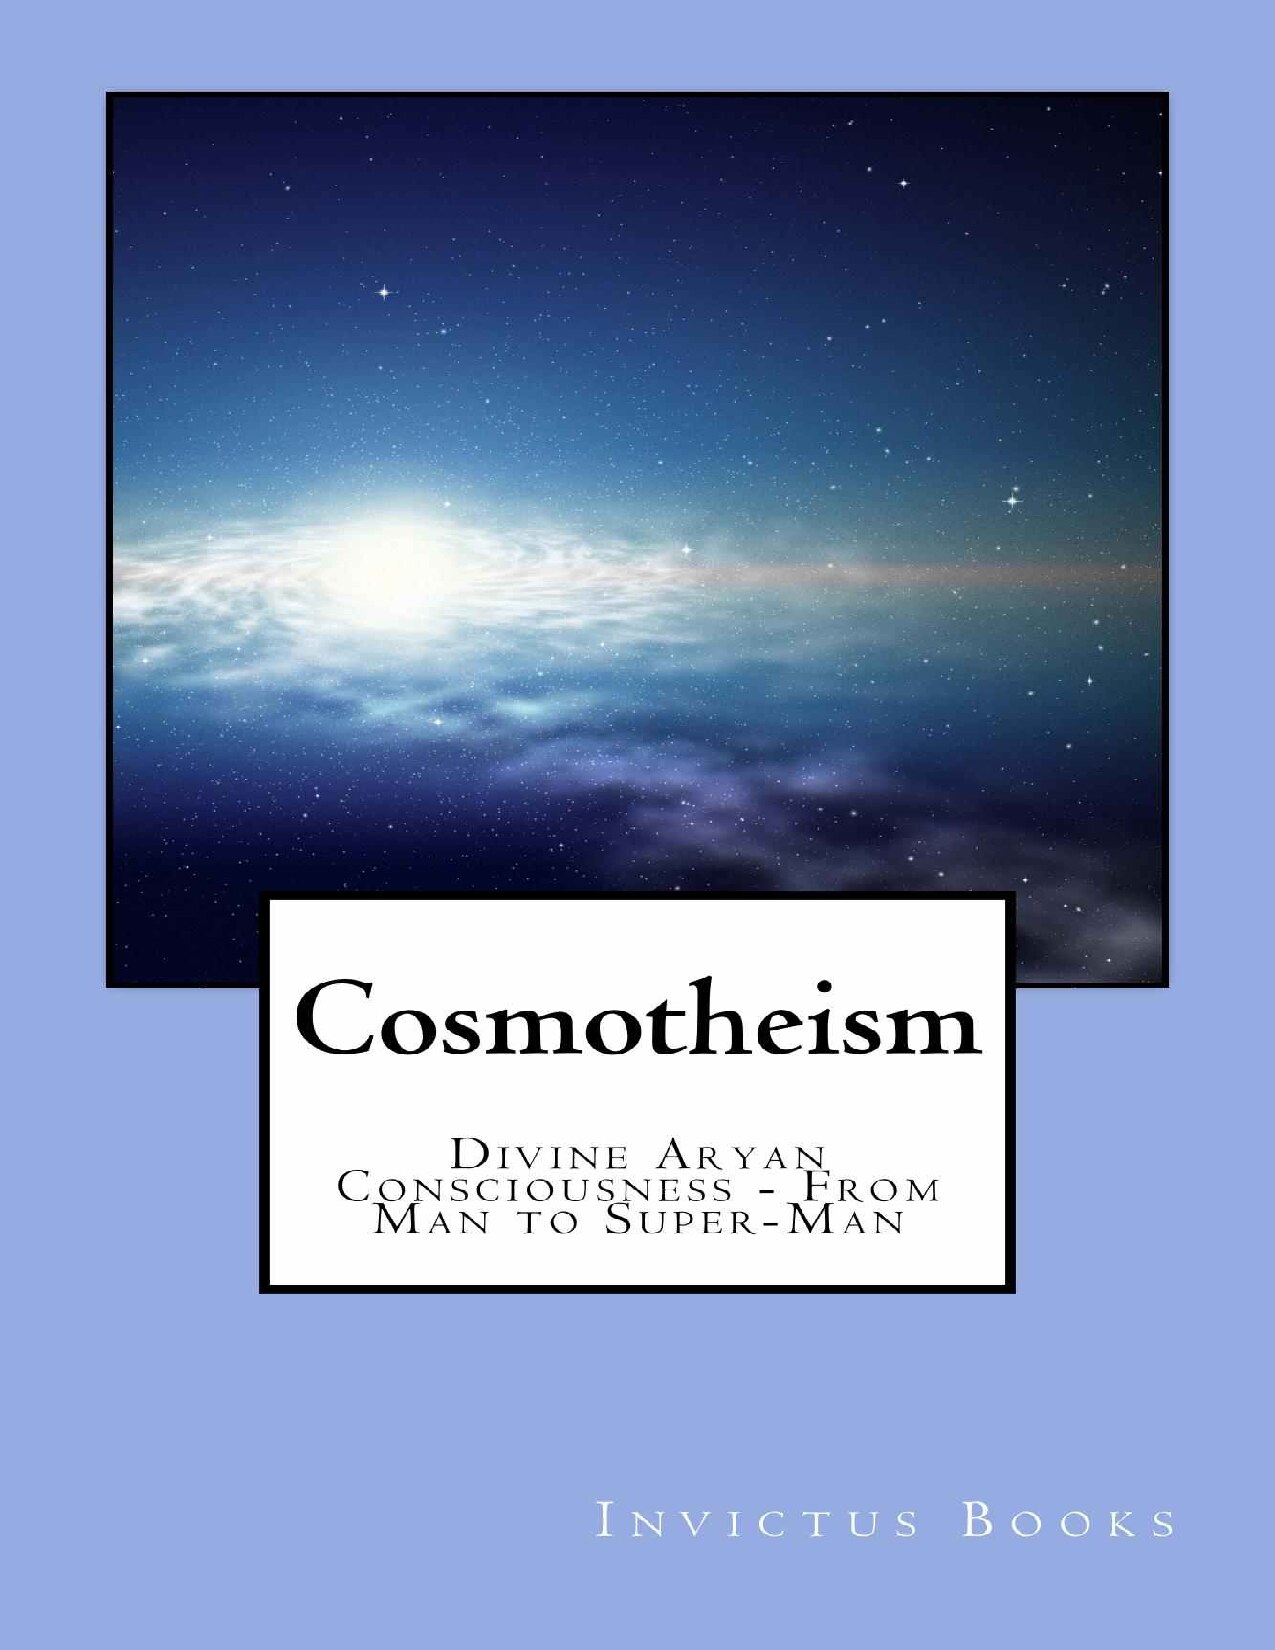 Cosmotheism